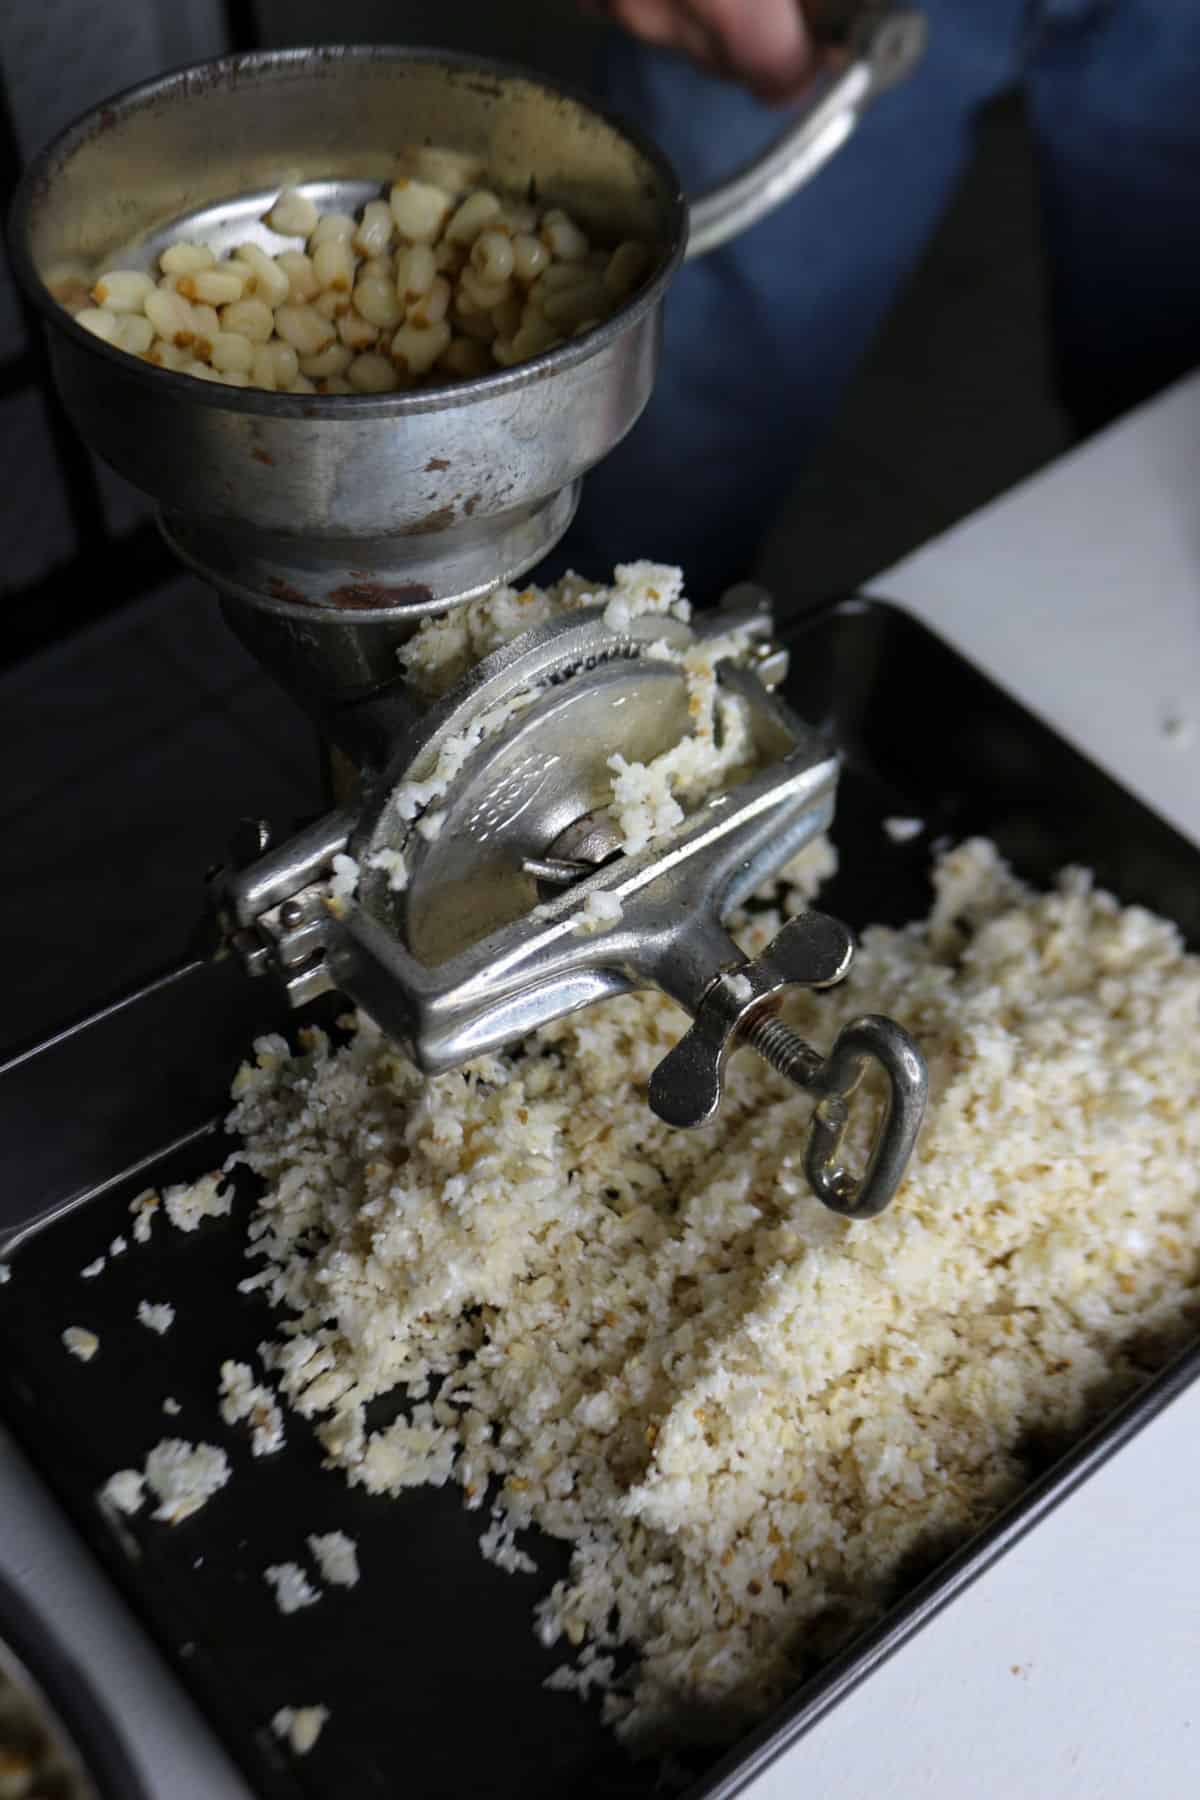 Grinding nixtamalized corn using a hand-crank mill